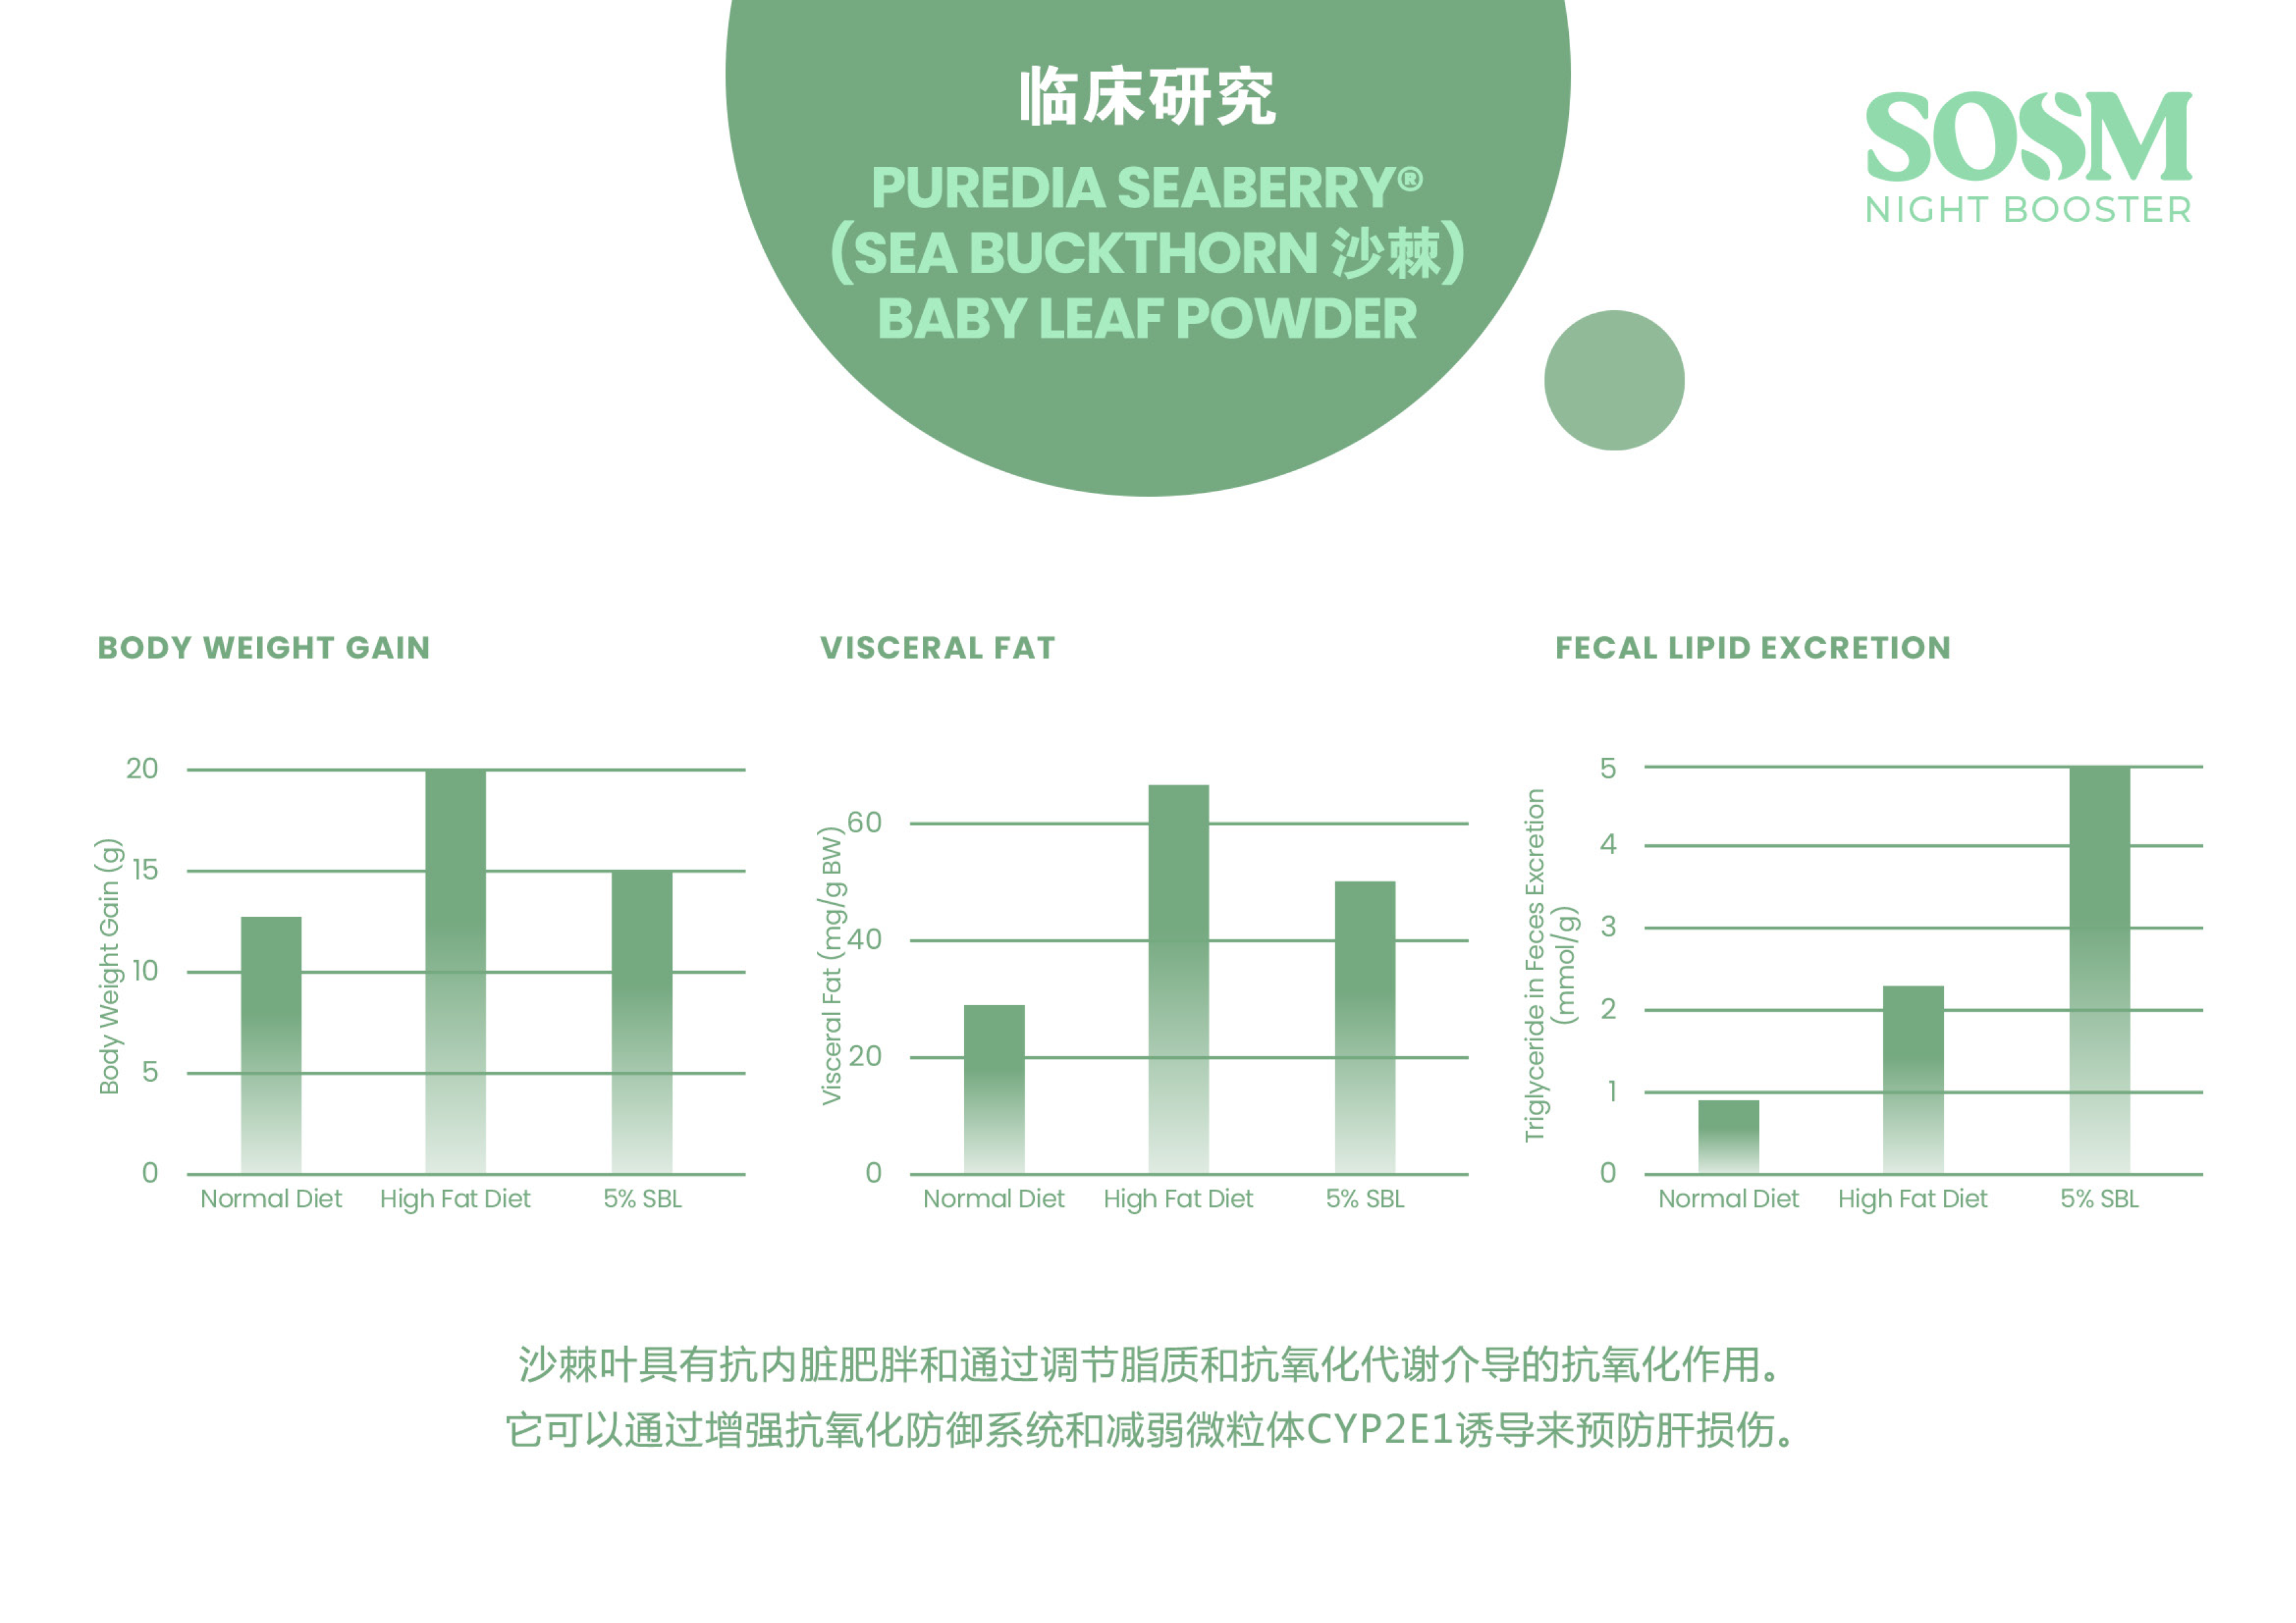 SOSM Night Booster - Puredia Baby Leaf Powder - Clinical Research